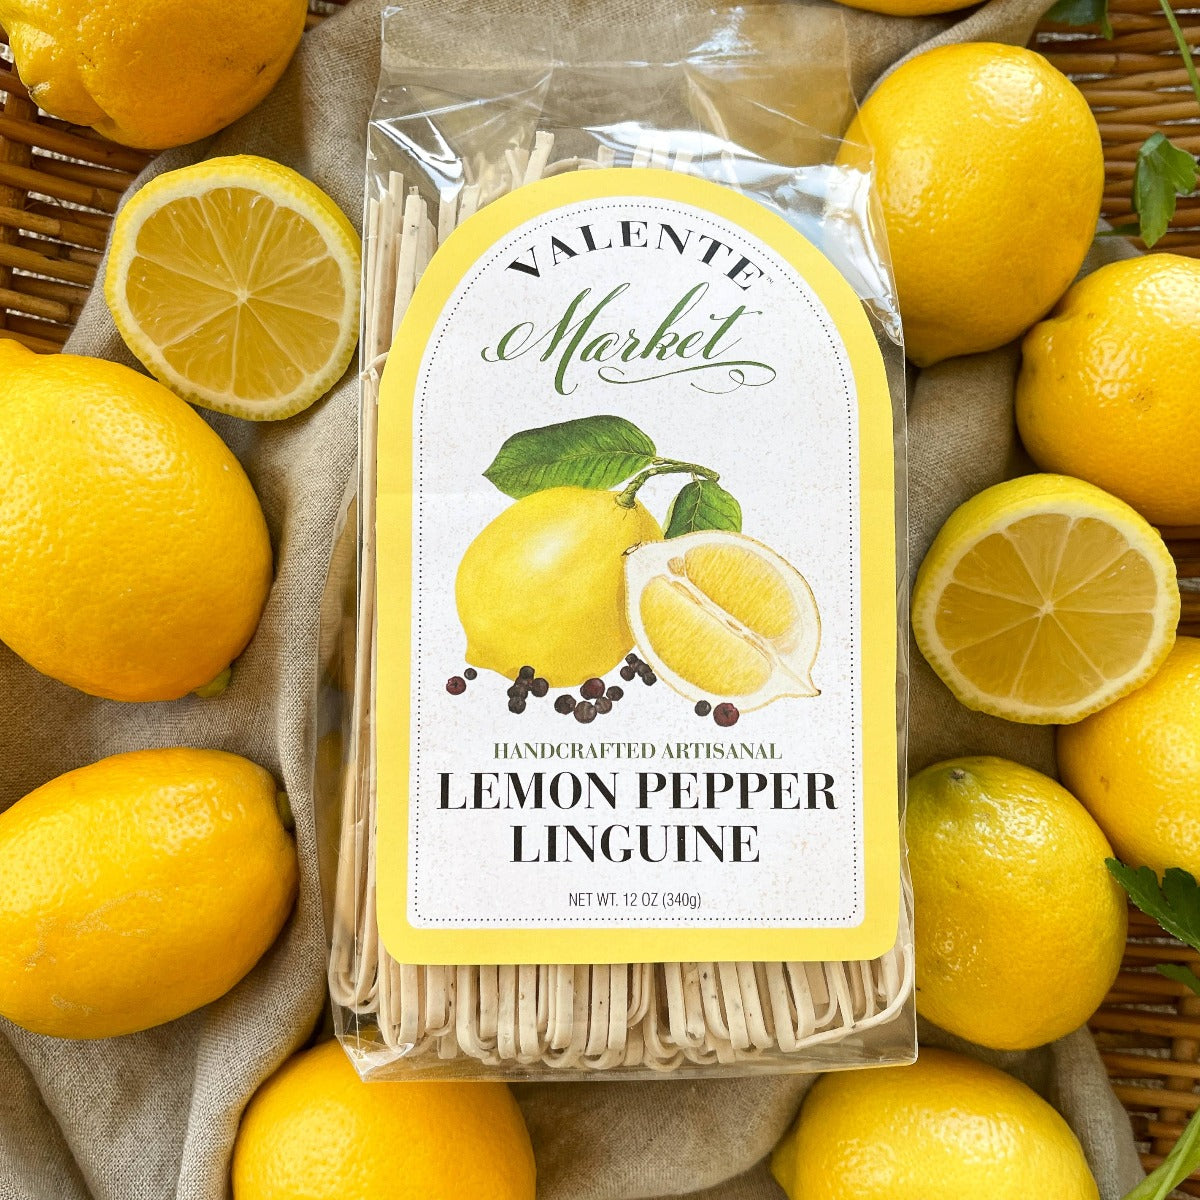 Lemon Pepper Linguine- Handcrafted Pasta